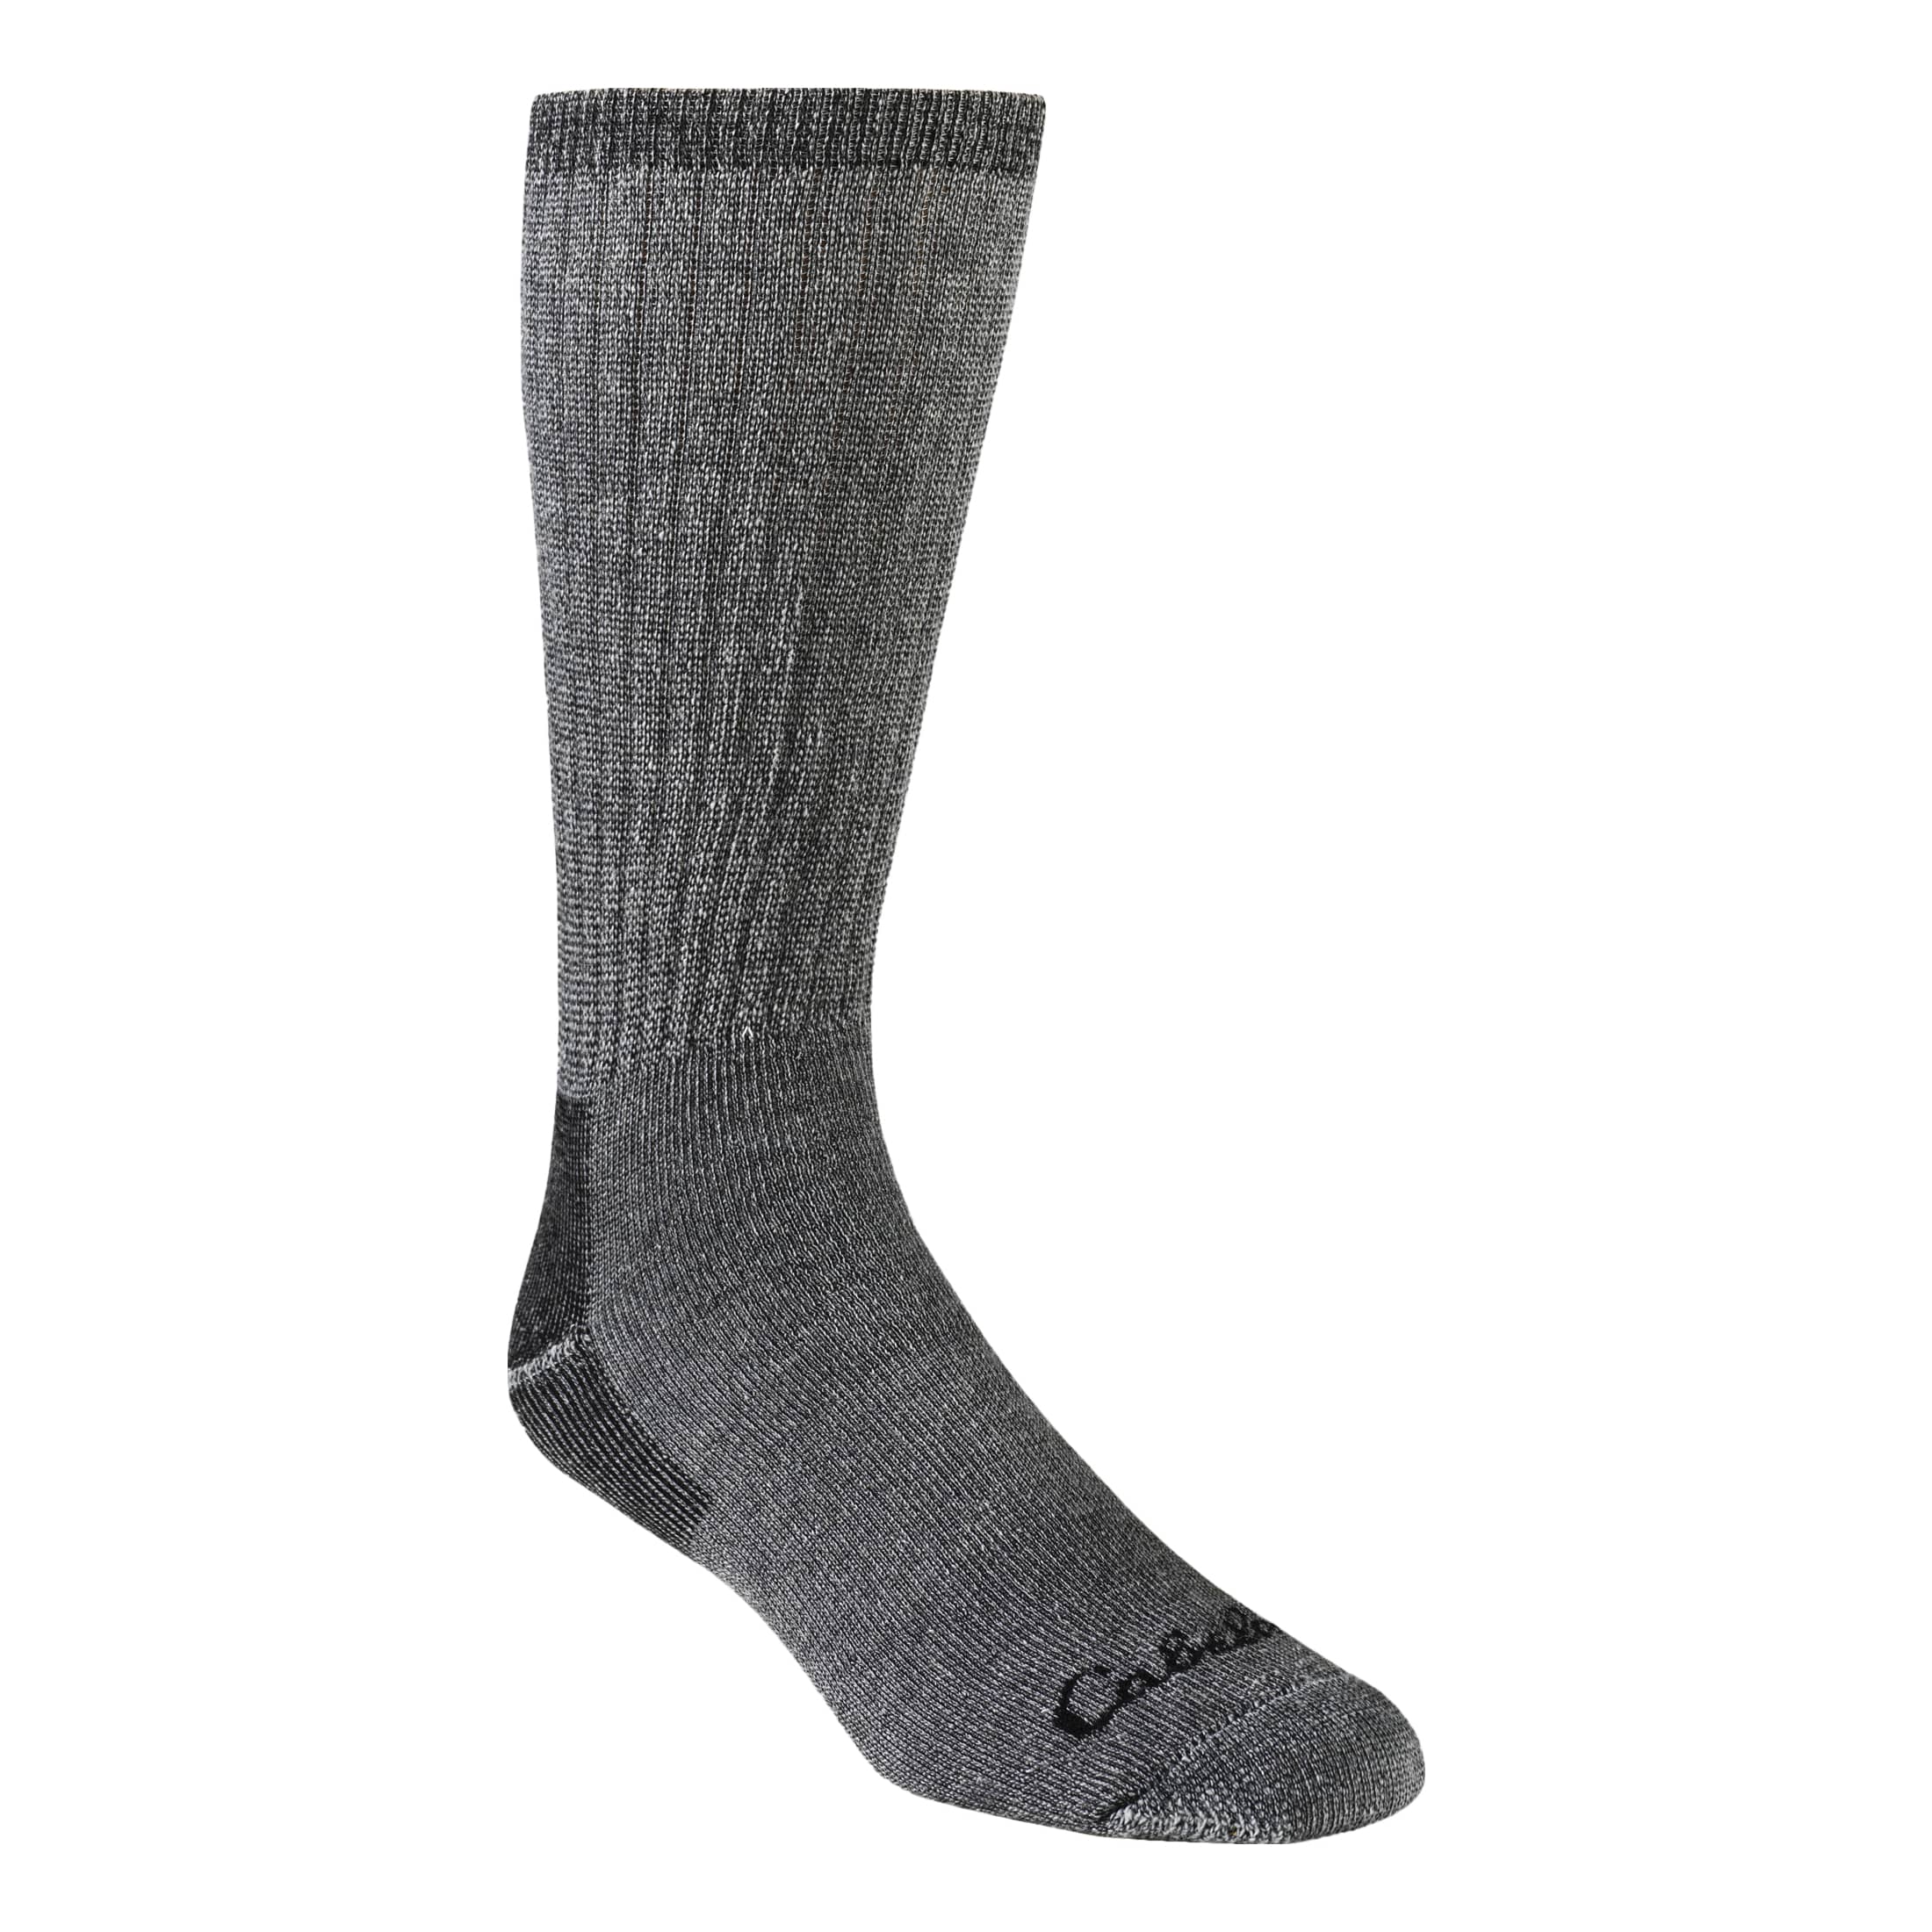 Welly Boot Socks in British Wool - Arbon Socks